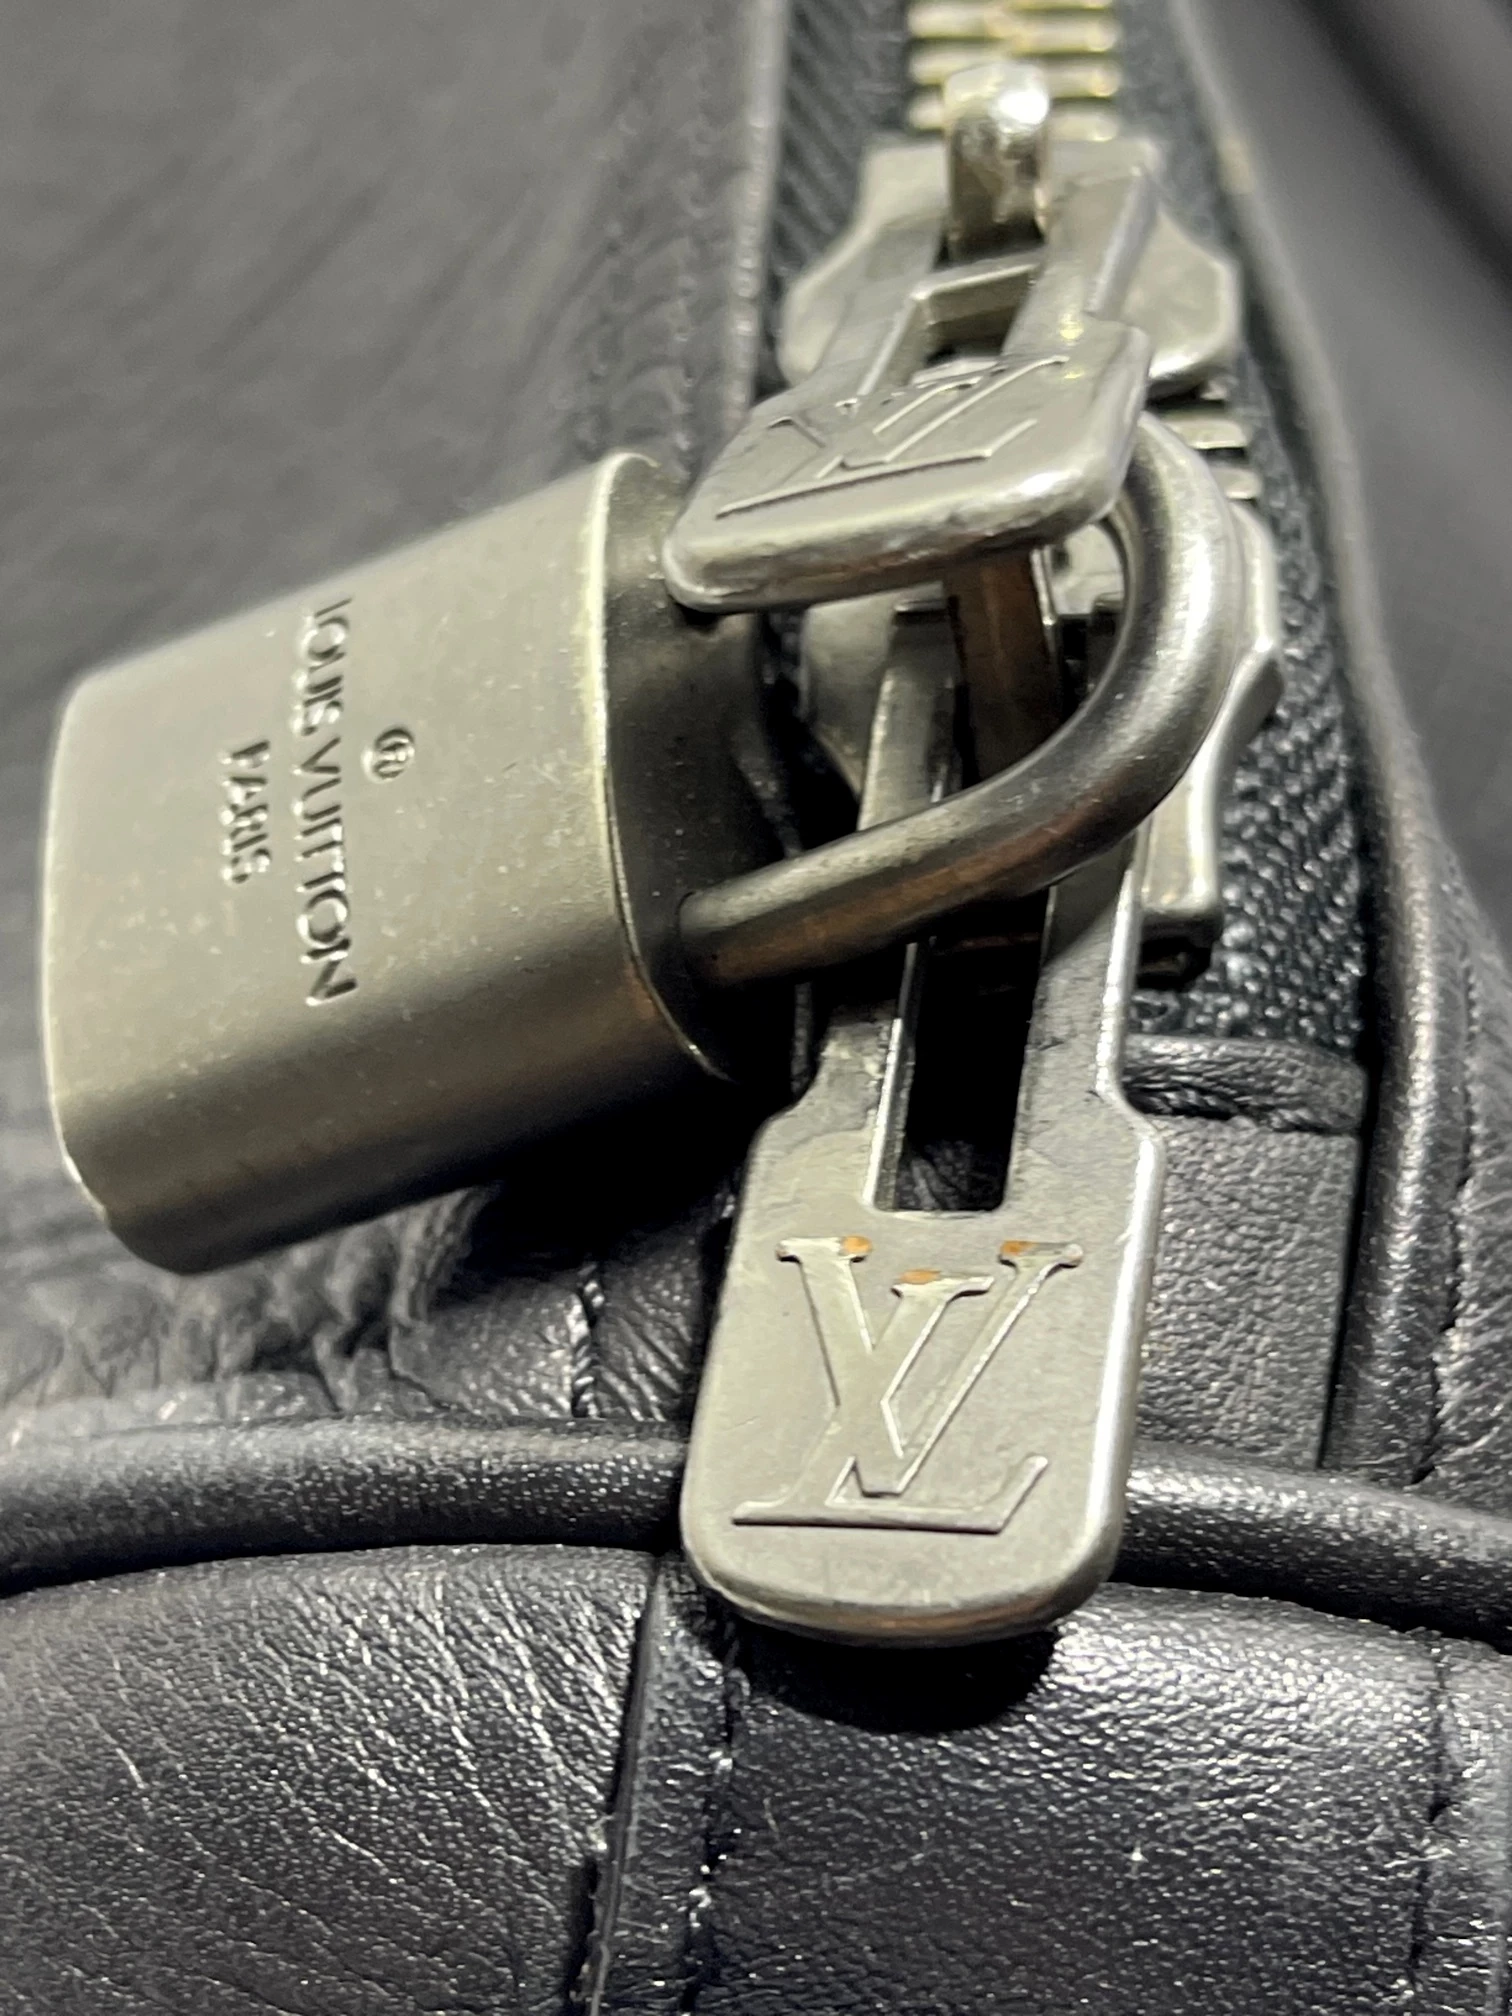 Torba podróżna Louis Vuitton. :) na ♥ Bags ♥ 